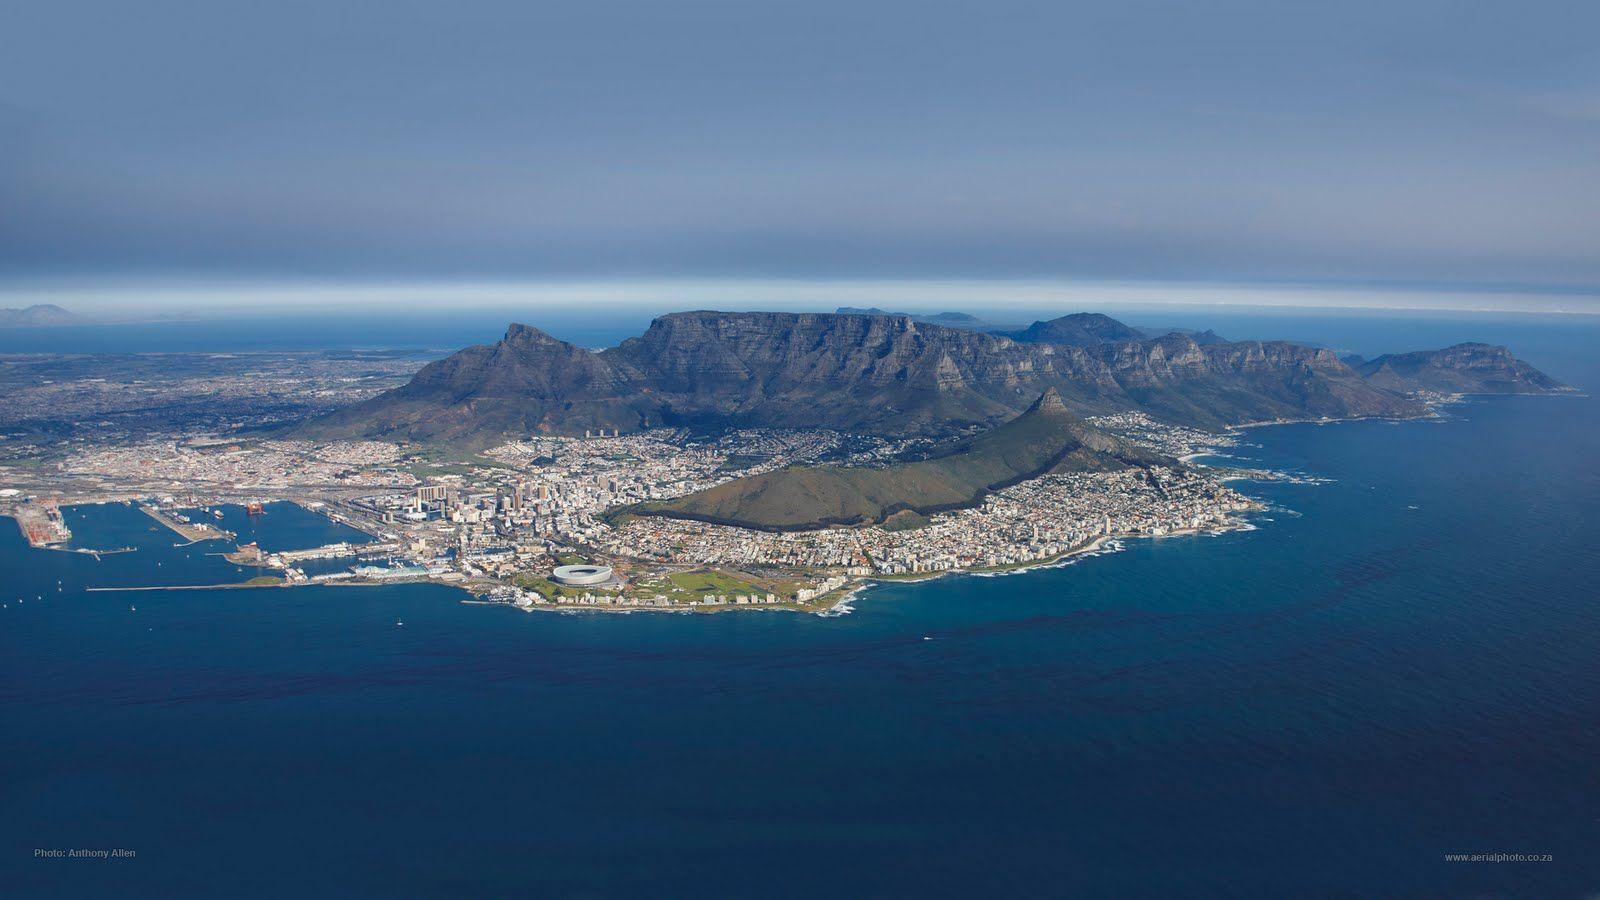 trololo blogg: Wallpaper Guides Cape Town